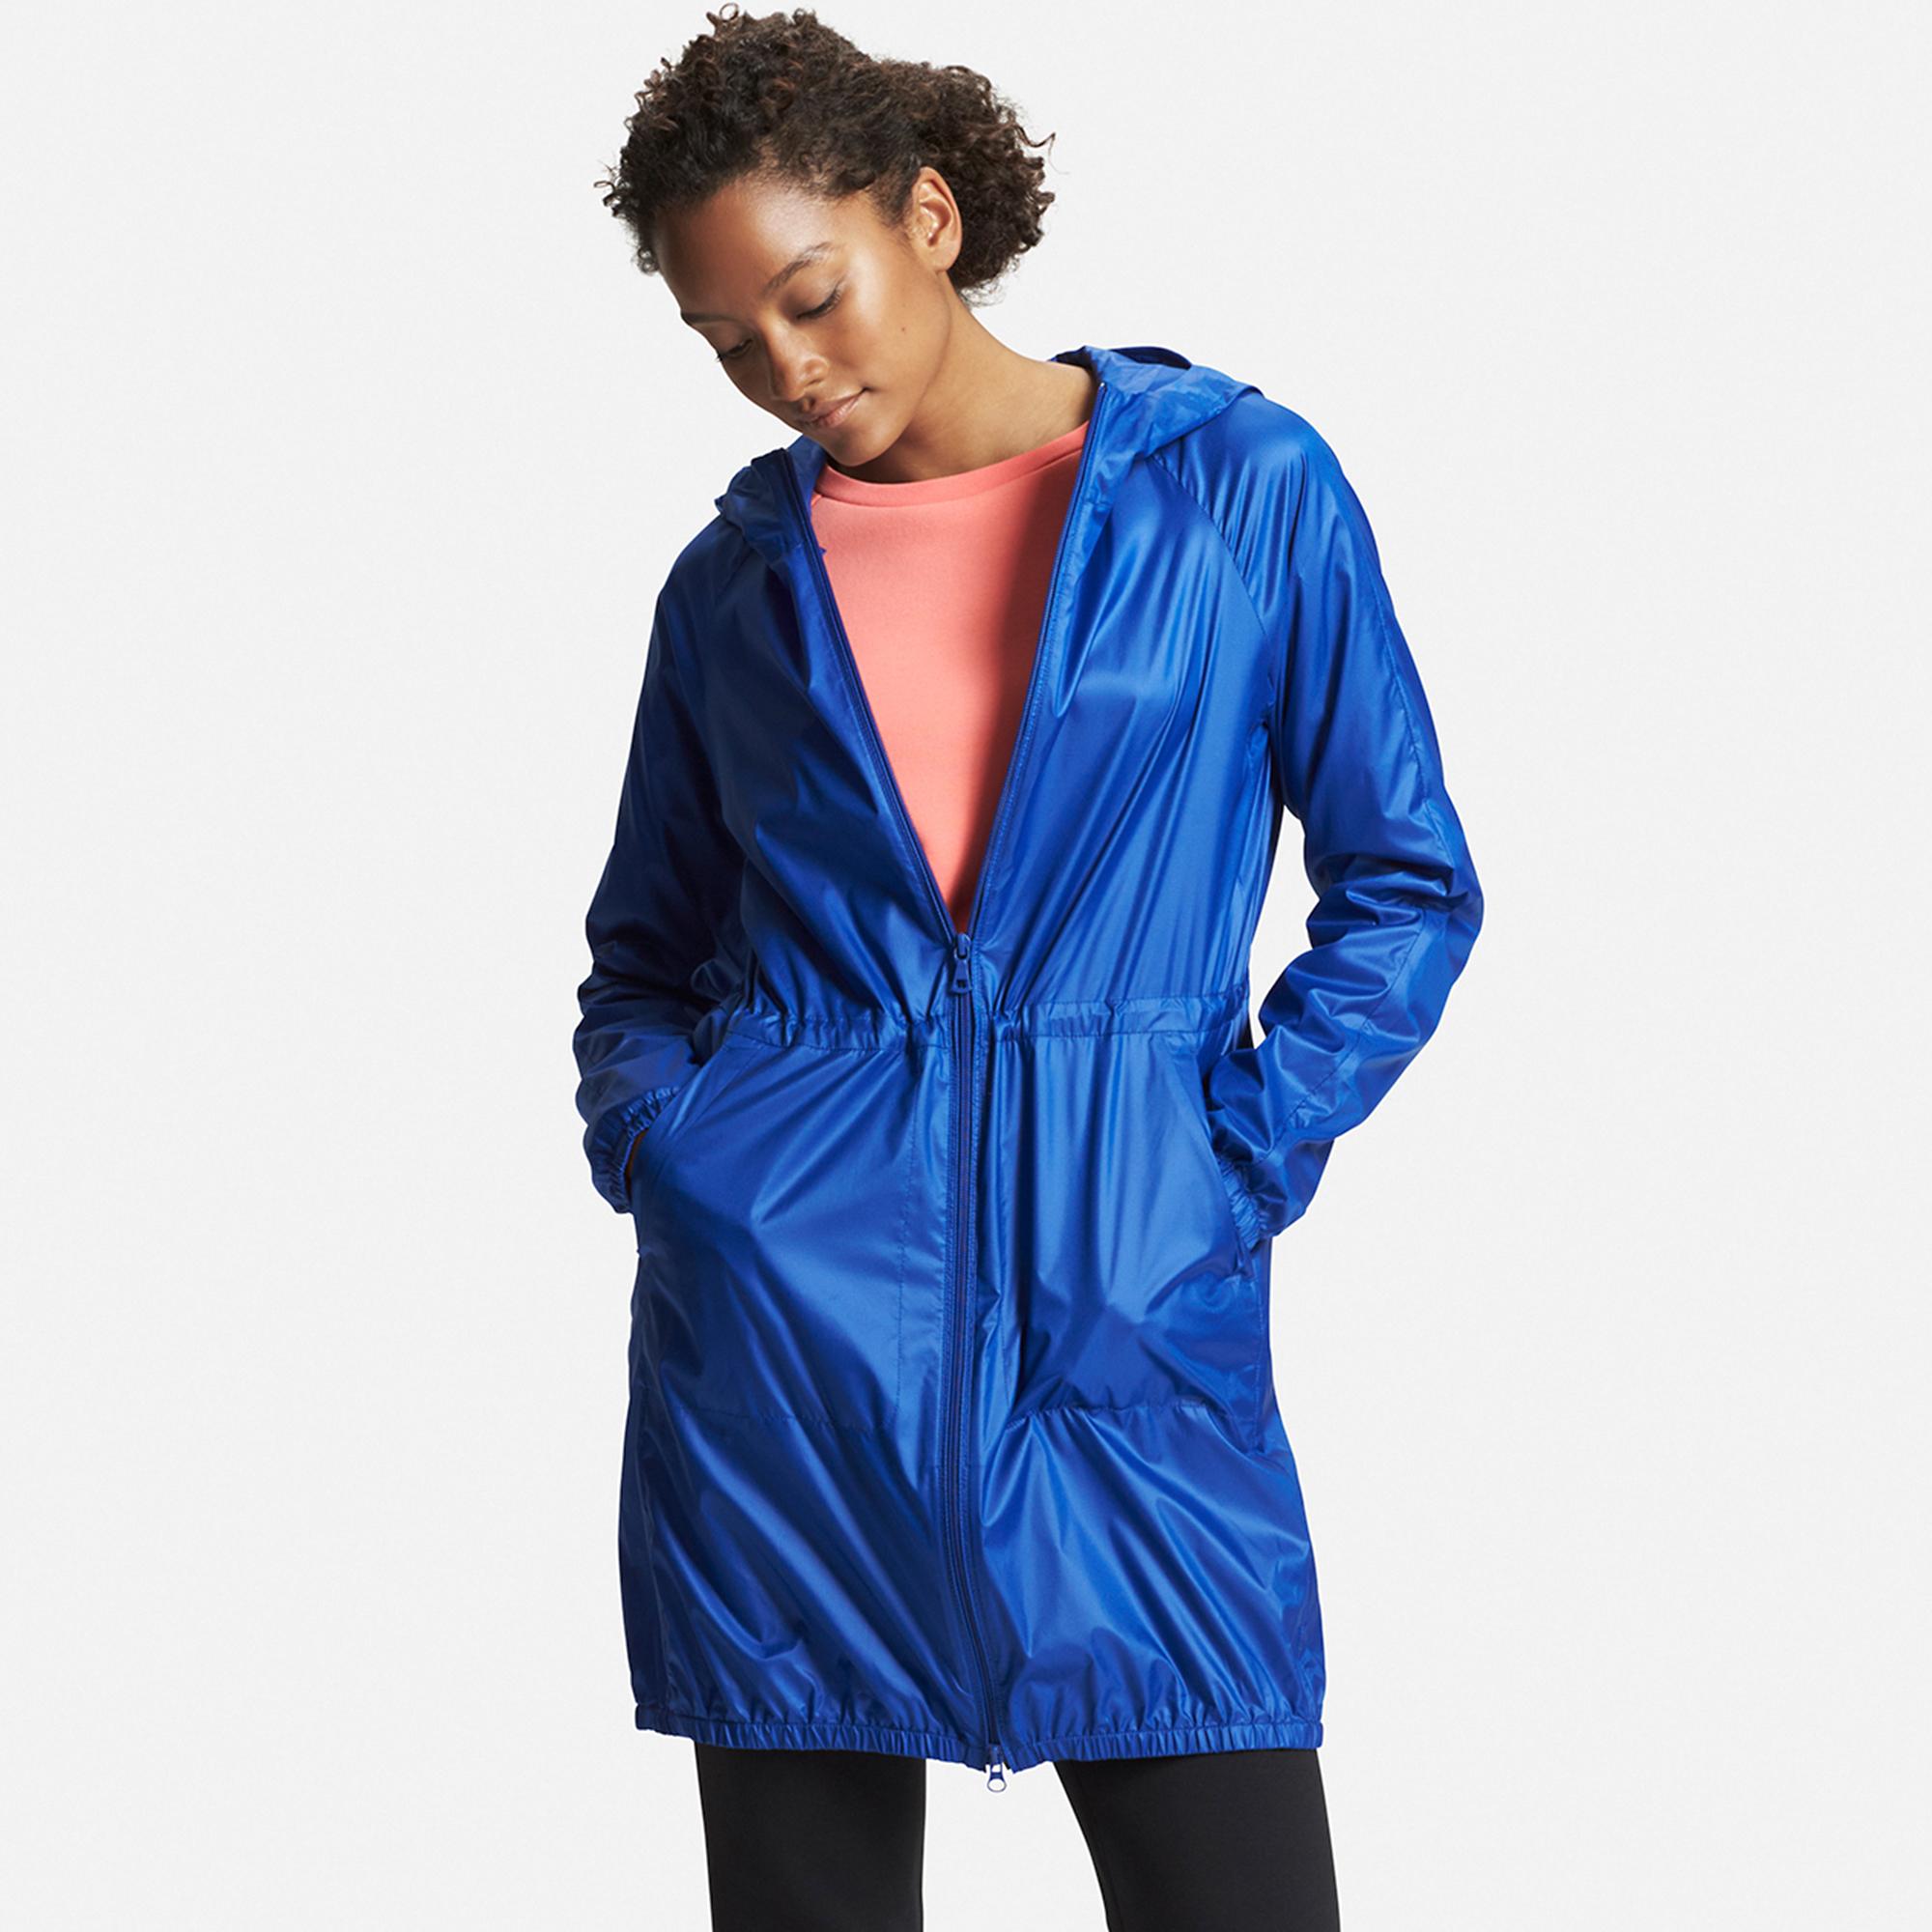 uniqlo blue raincoat with pockets